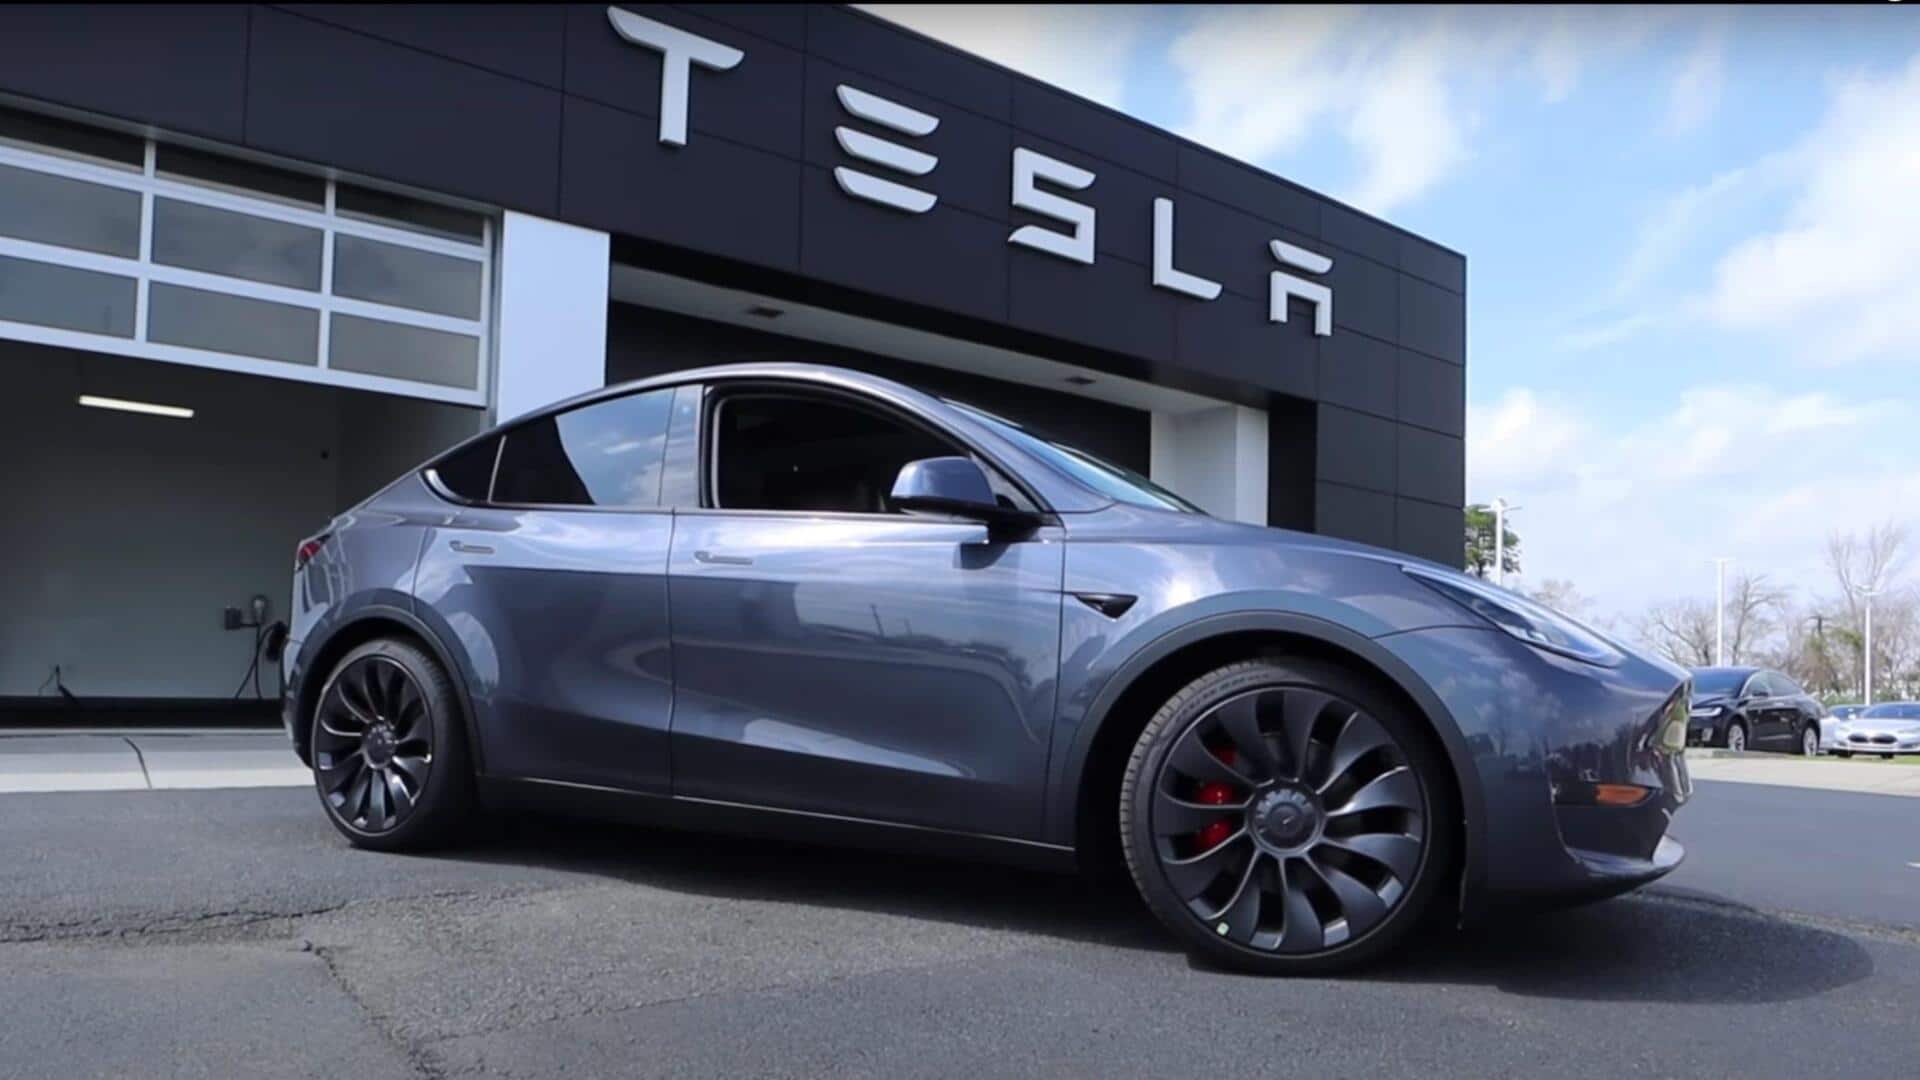 Tesla sold just 1 car in South Korea last month